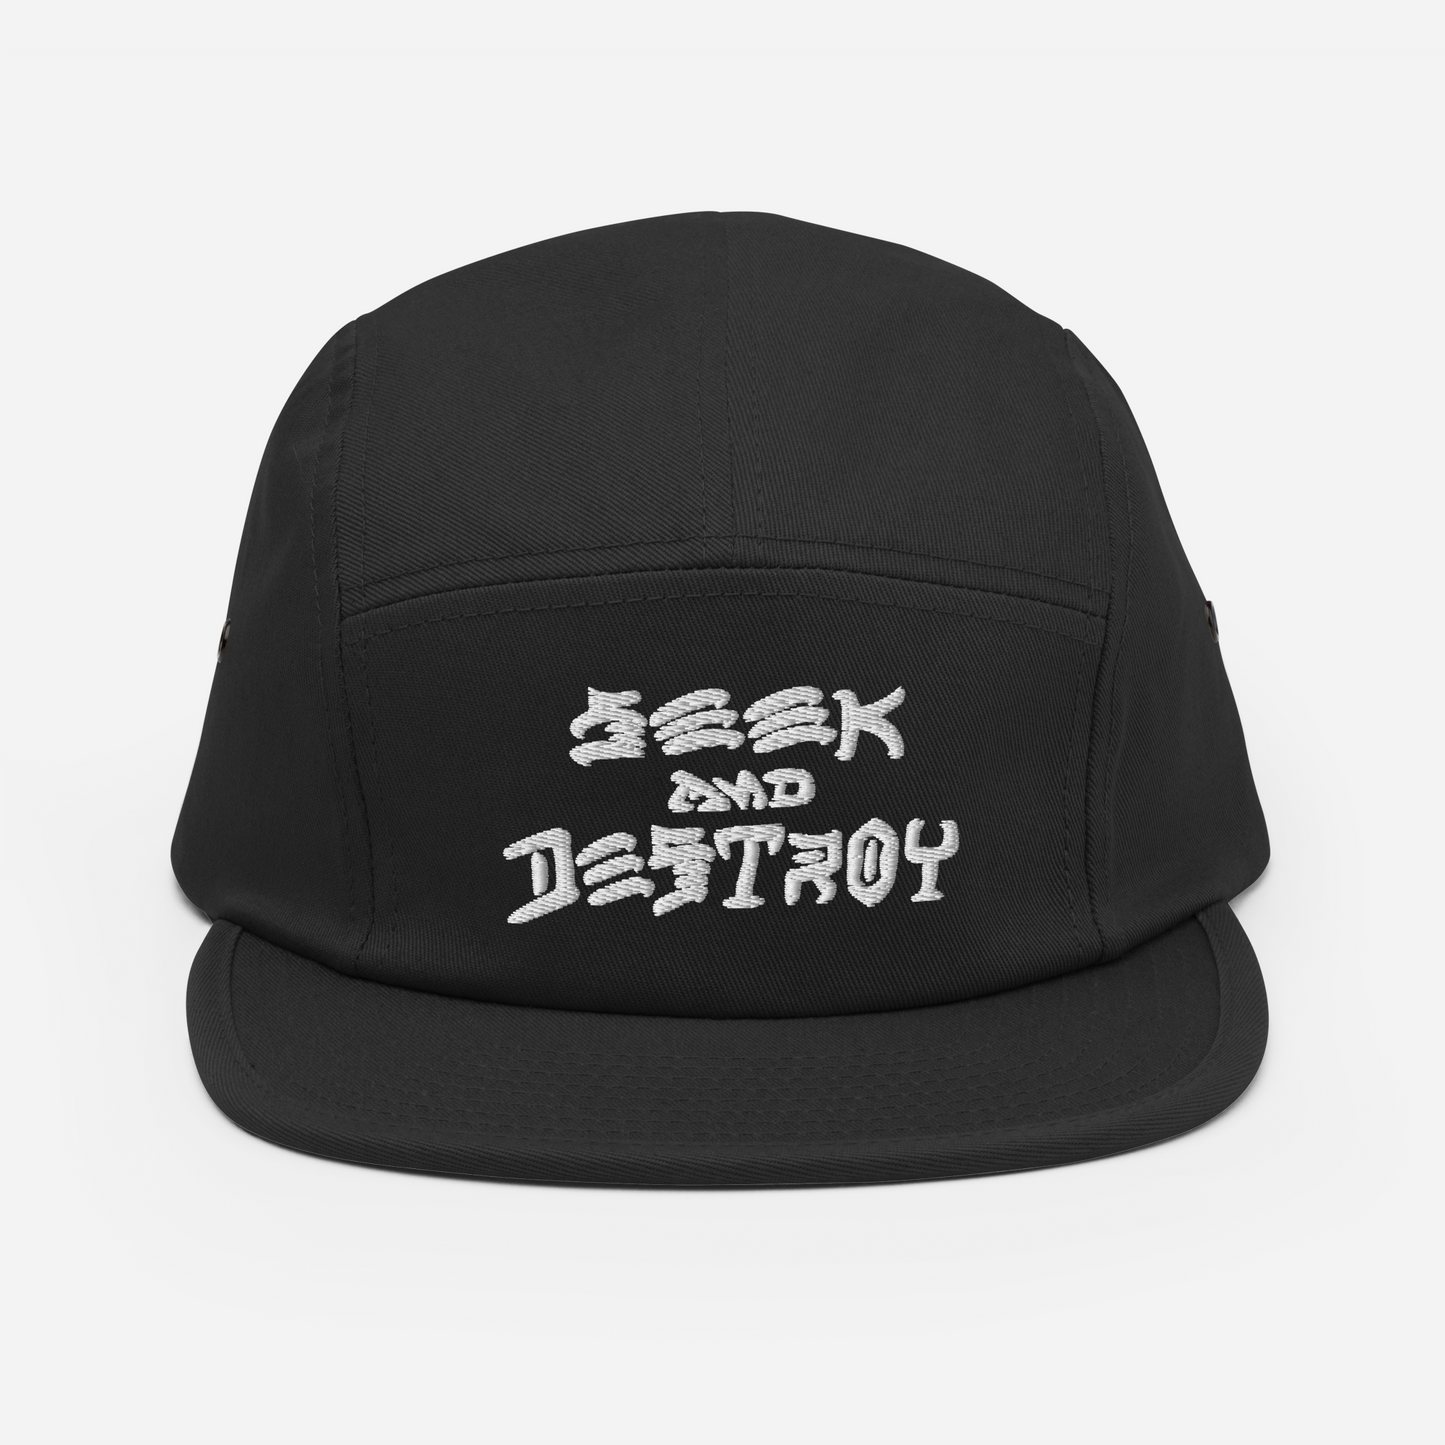 “SEEK AND DESTROY” Black/White 5 panel cap